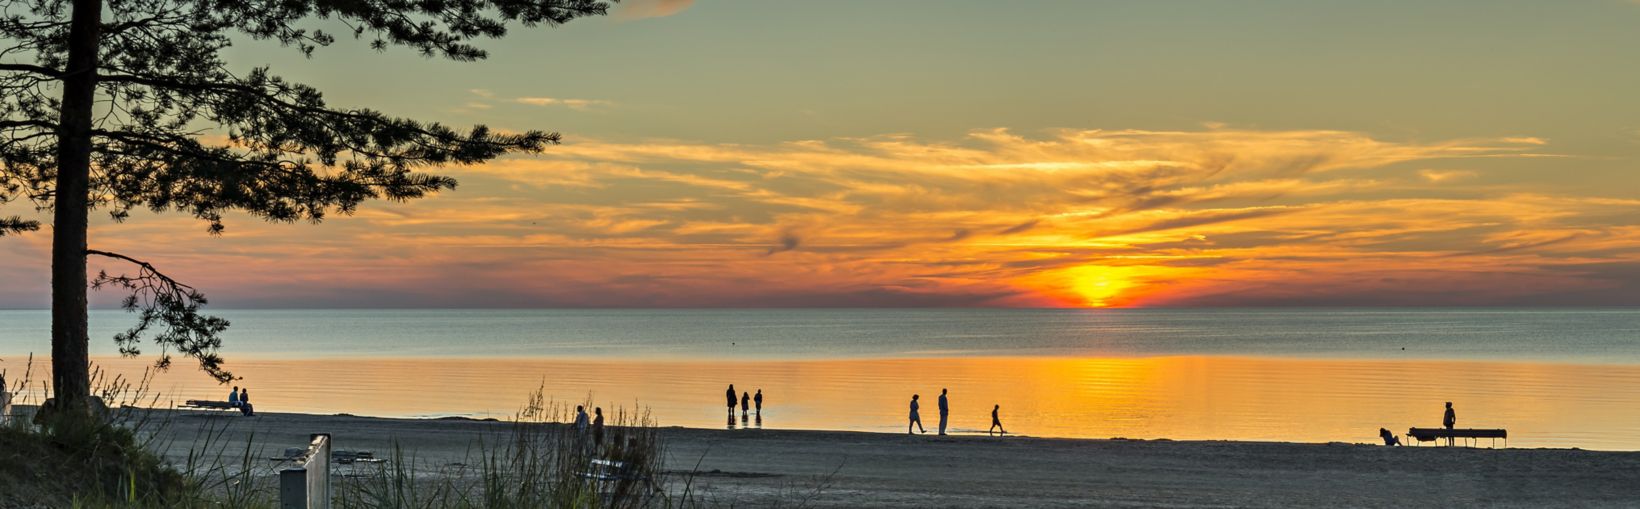 Farbenfroher Sonnenuntergang am Sandstrand von Jurmala – dem berühmten Badeort im Baltikum, Lettland.